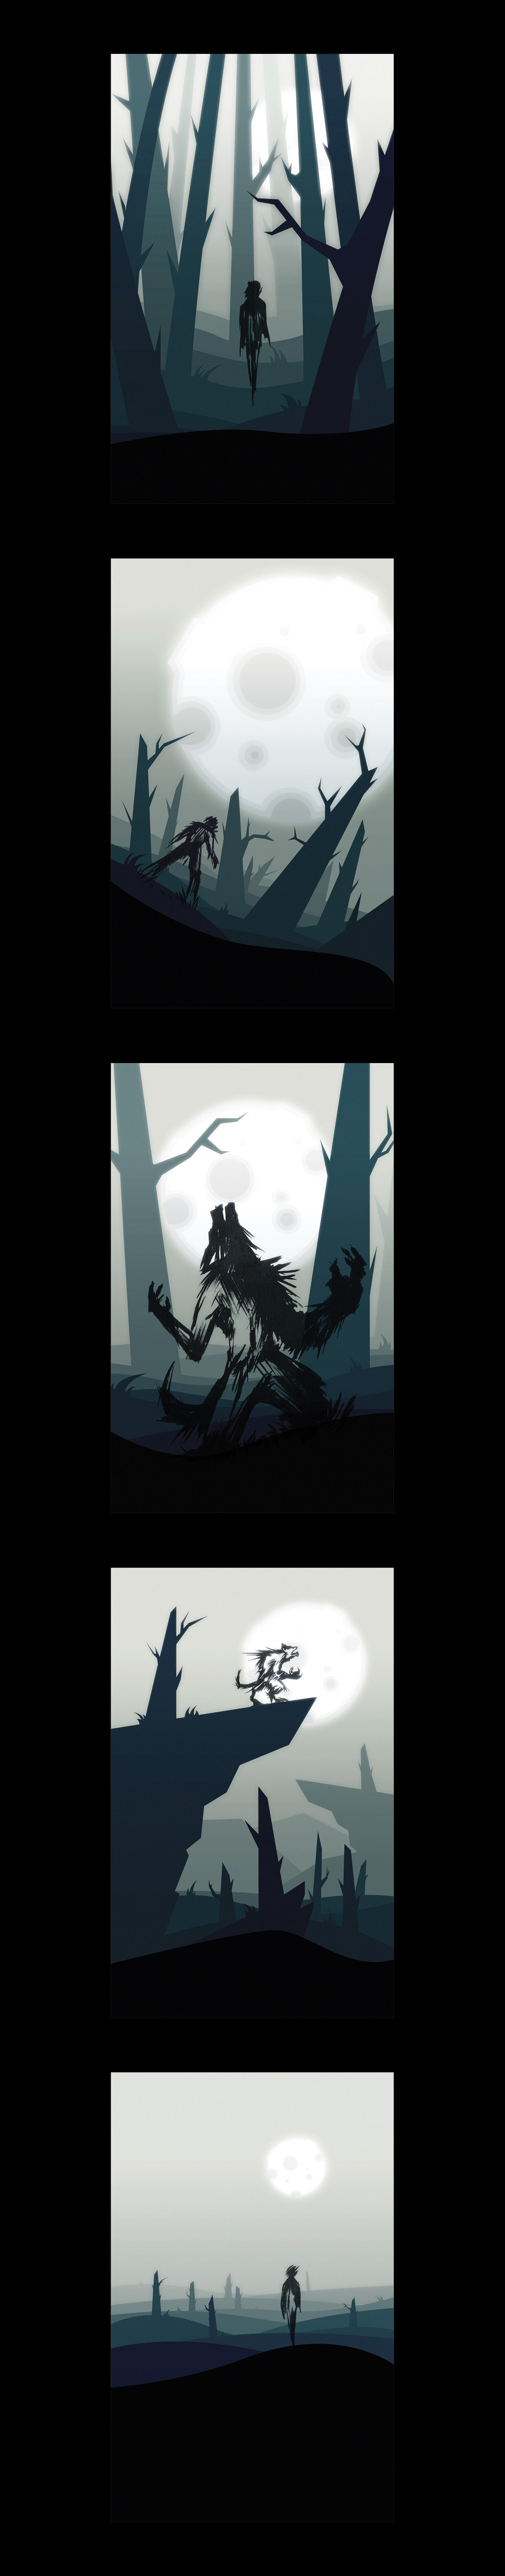 Mix media lycan Werewolf loup garou forest alone night lycanthrope Mélancolique Melancholic book forêt livre full moon